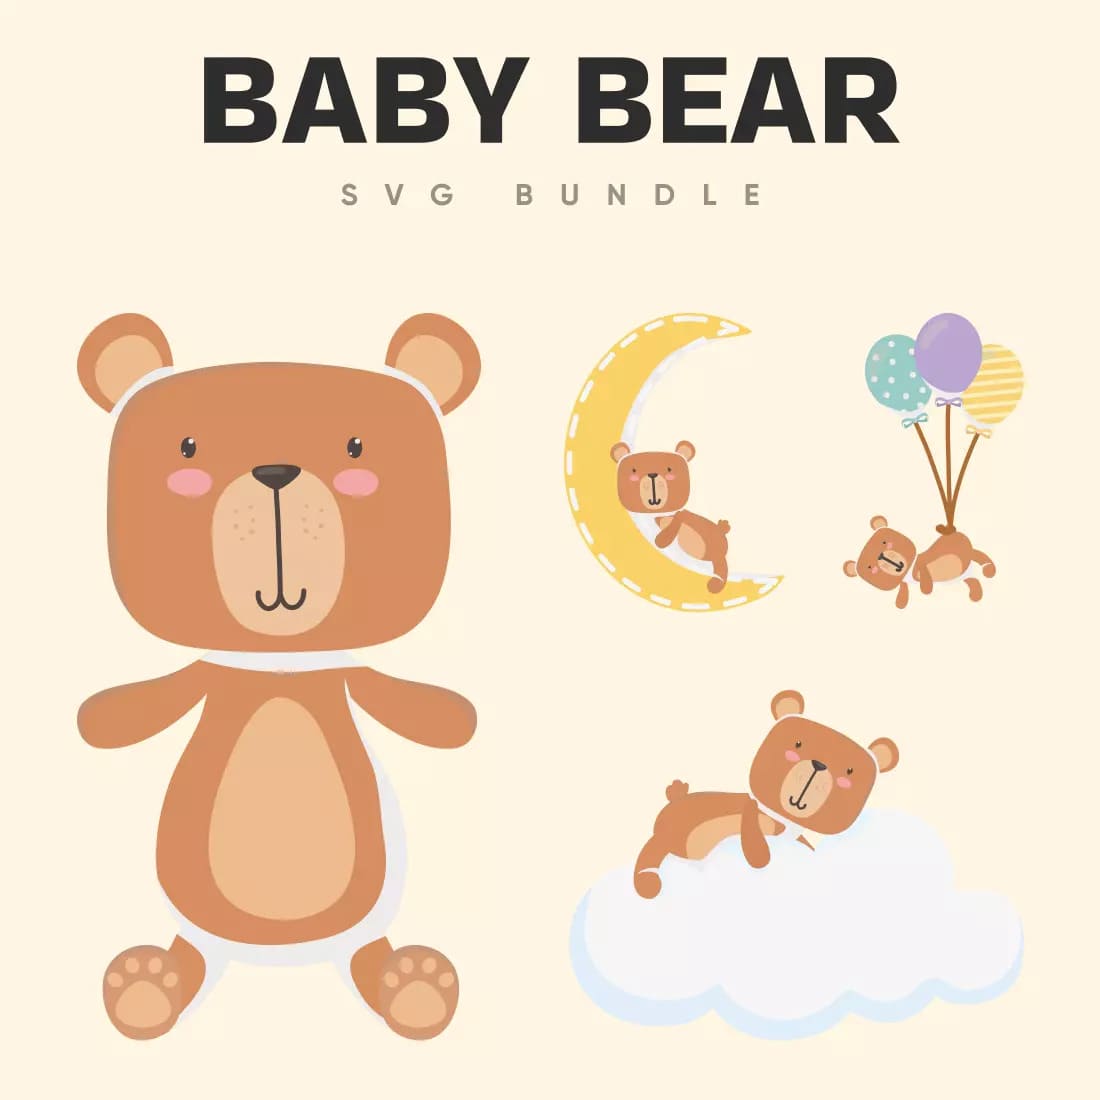 Baby bear svg bundle is shown.